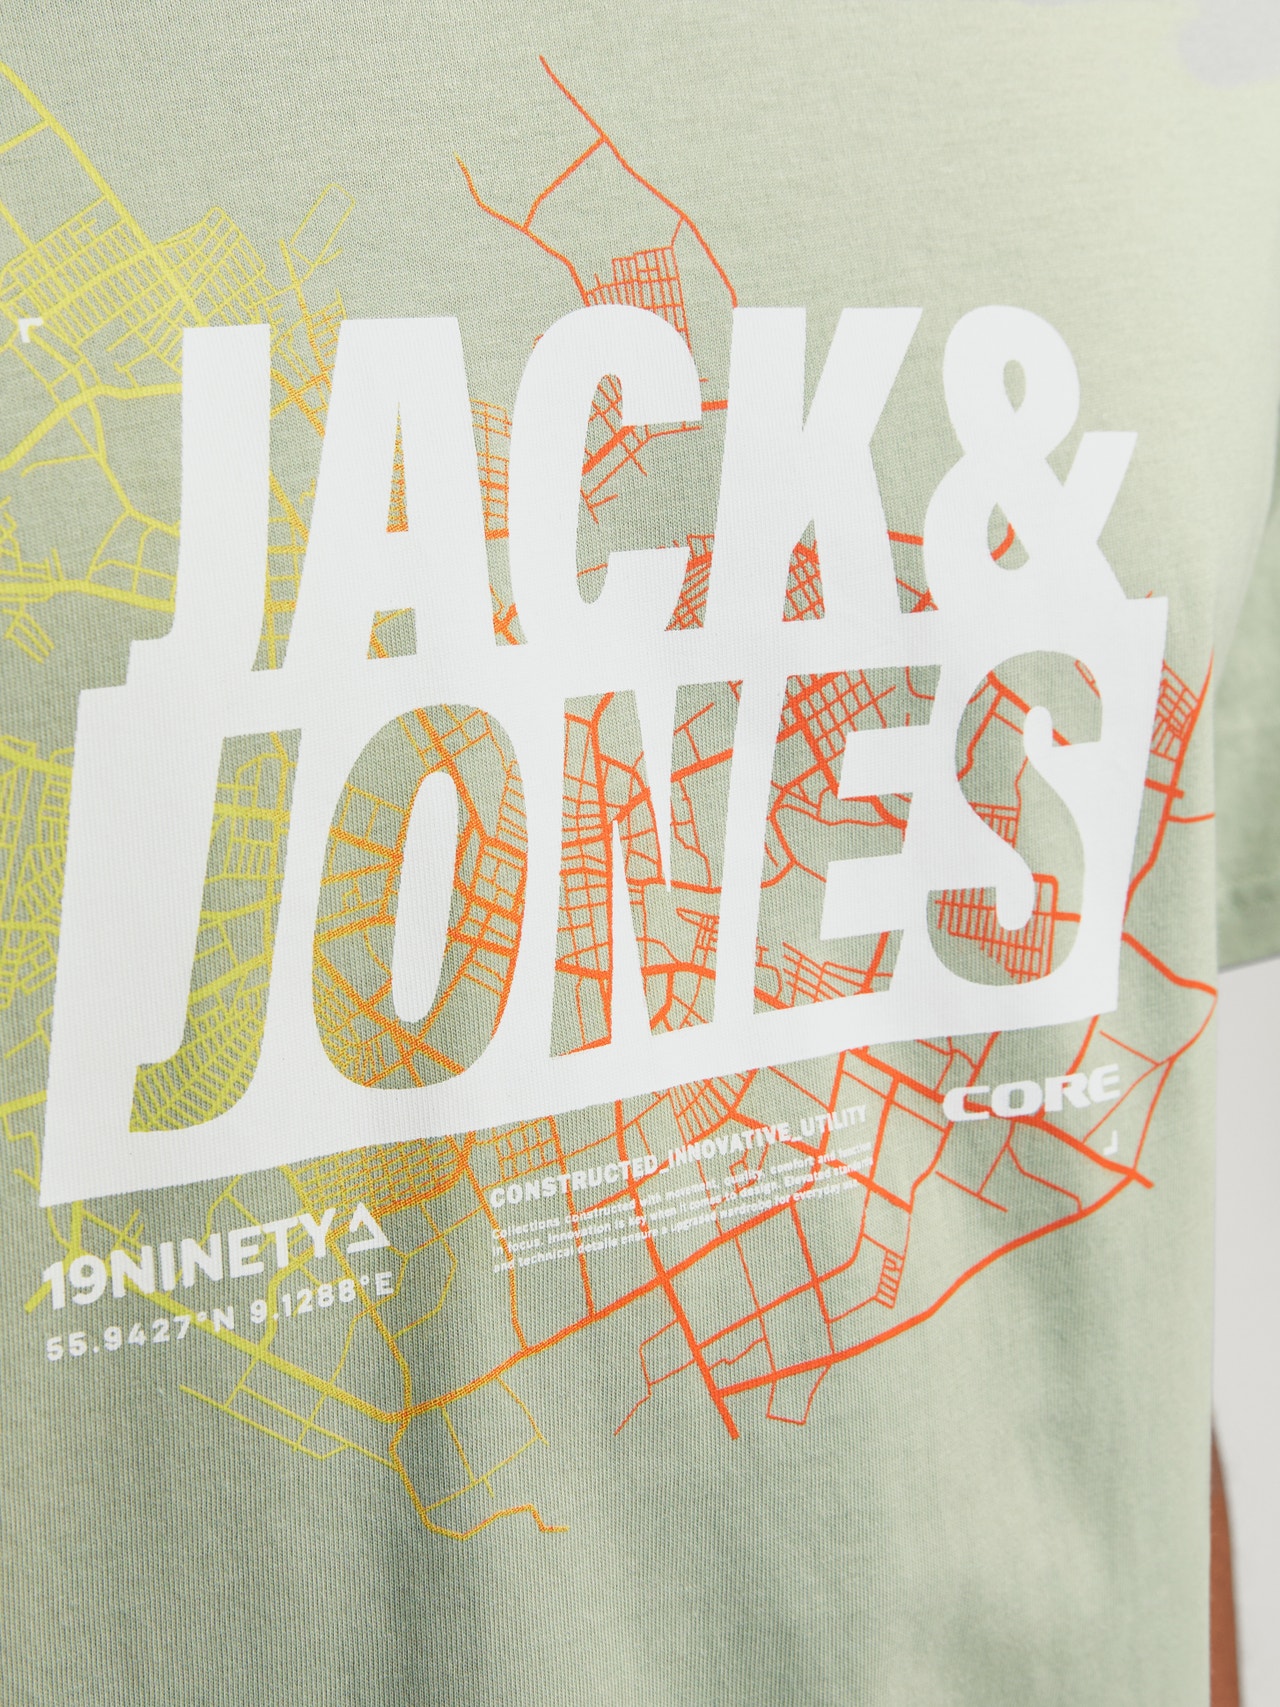 Jack & Jones T-shirt Stampato Girocollo -Desert Sage - 12257908